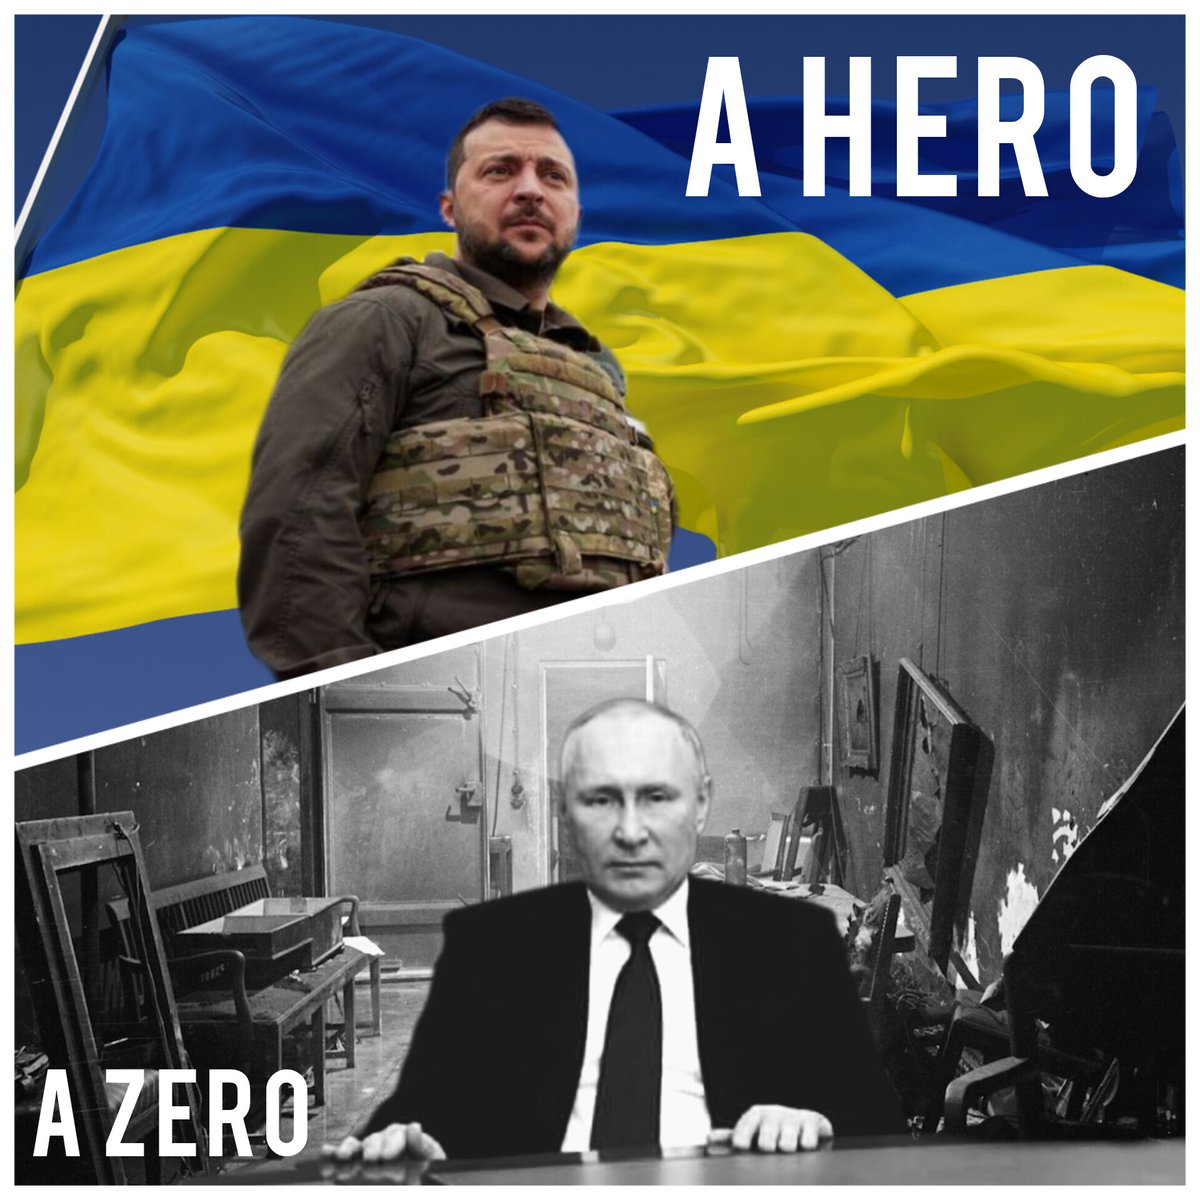 @id_communism Standing up against wannabe zar putins illegal invasion of Ukraine makes #ZelenskyyWarHero in my book 😊
#SlavaUkraïni #heroyamslava ✊